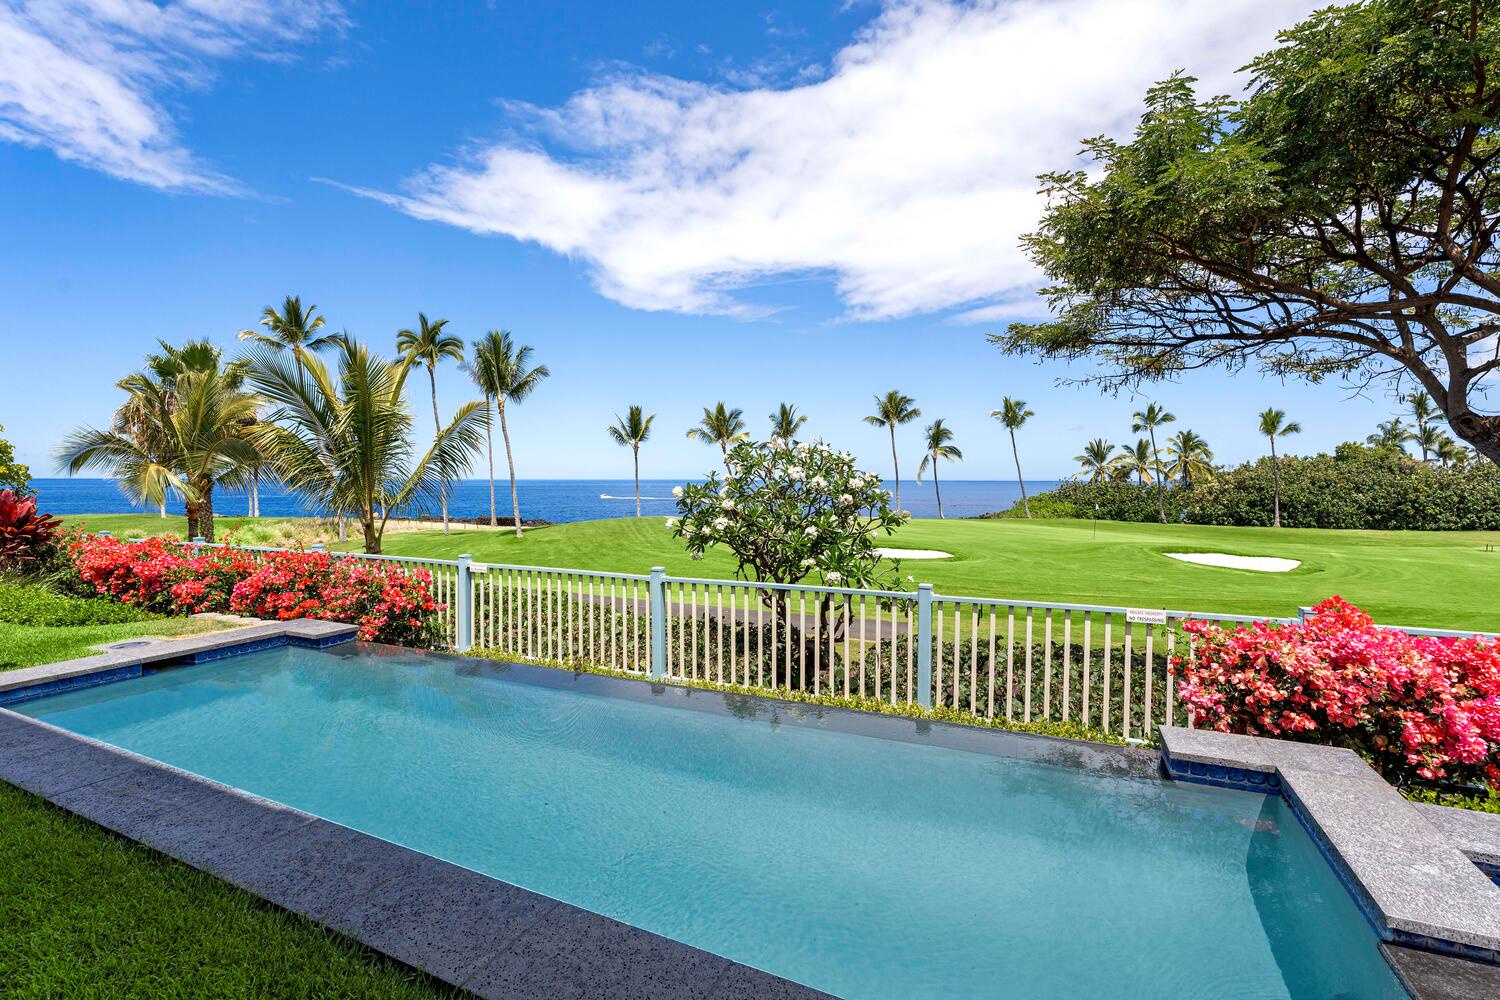 Kailua-Kona Vacation Rentals, Holua Kai #26 - The poolside view looking over the golf course.